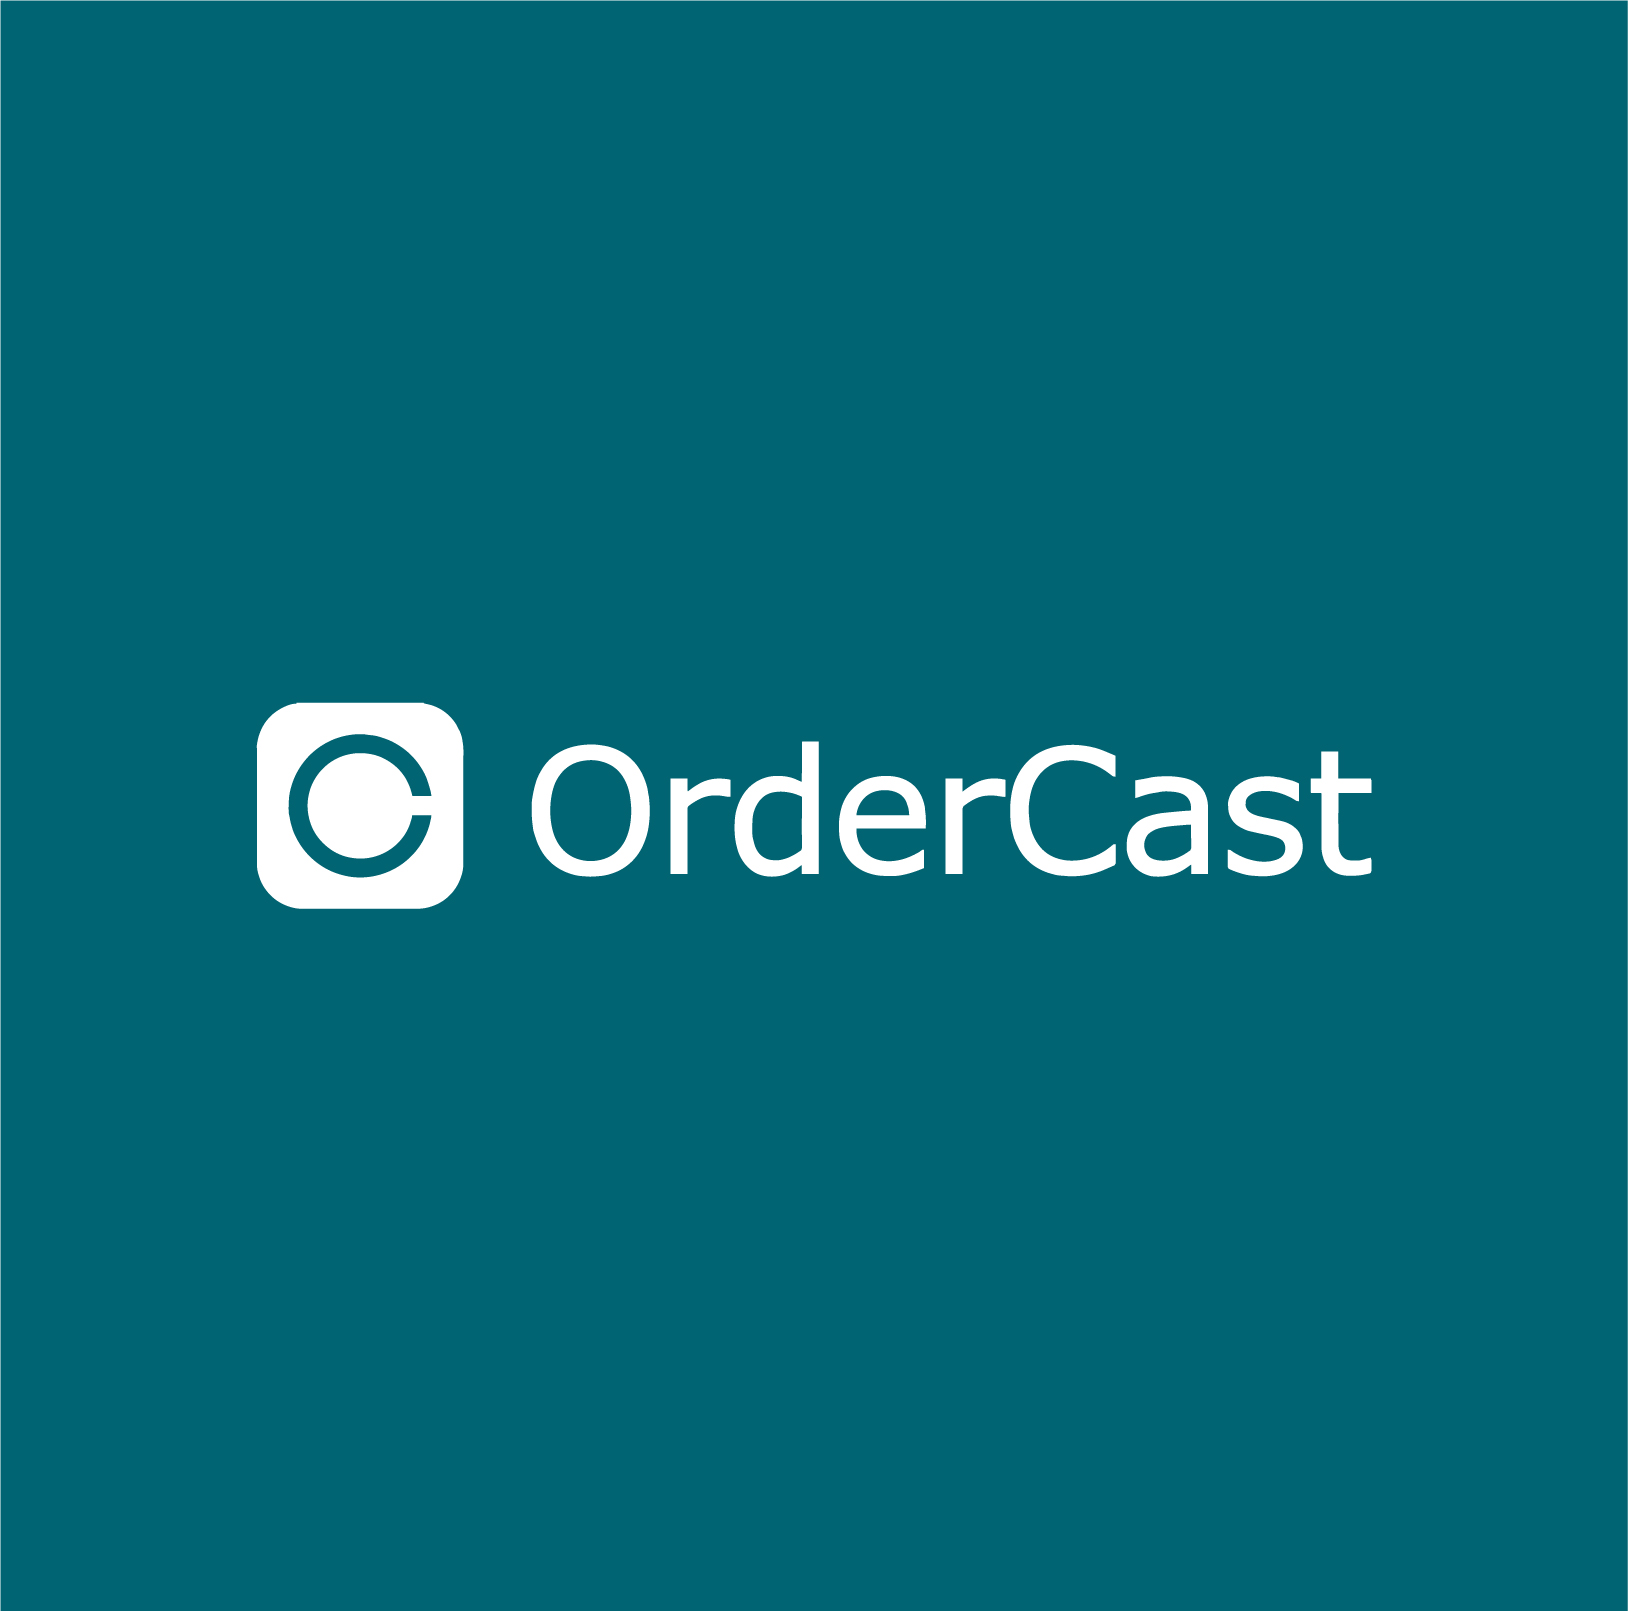 Ordercast